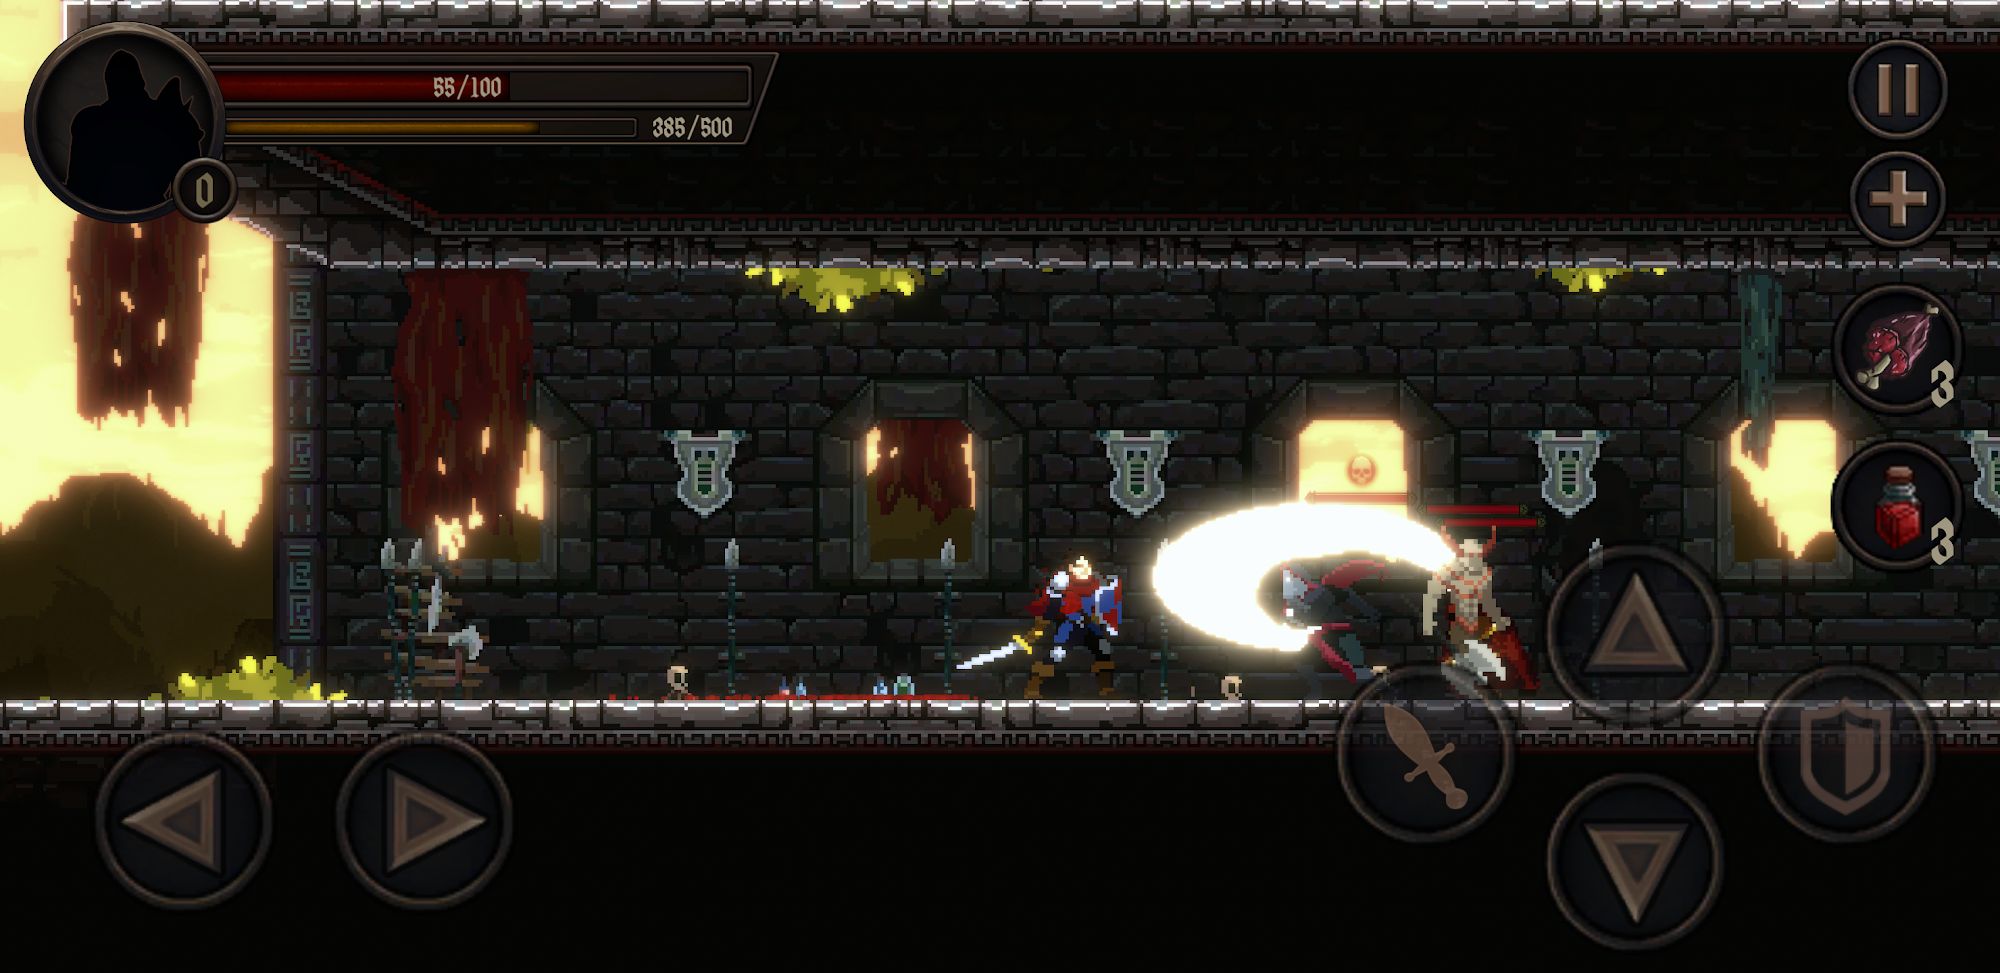 Castellan - Android game screenshots.